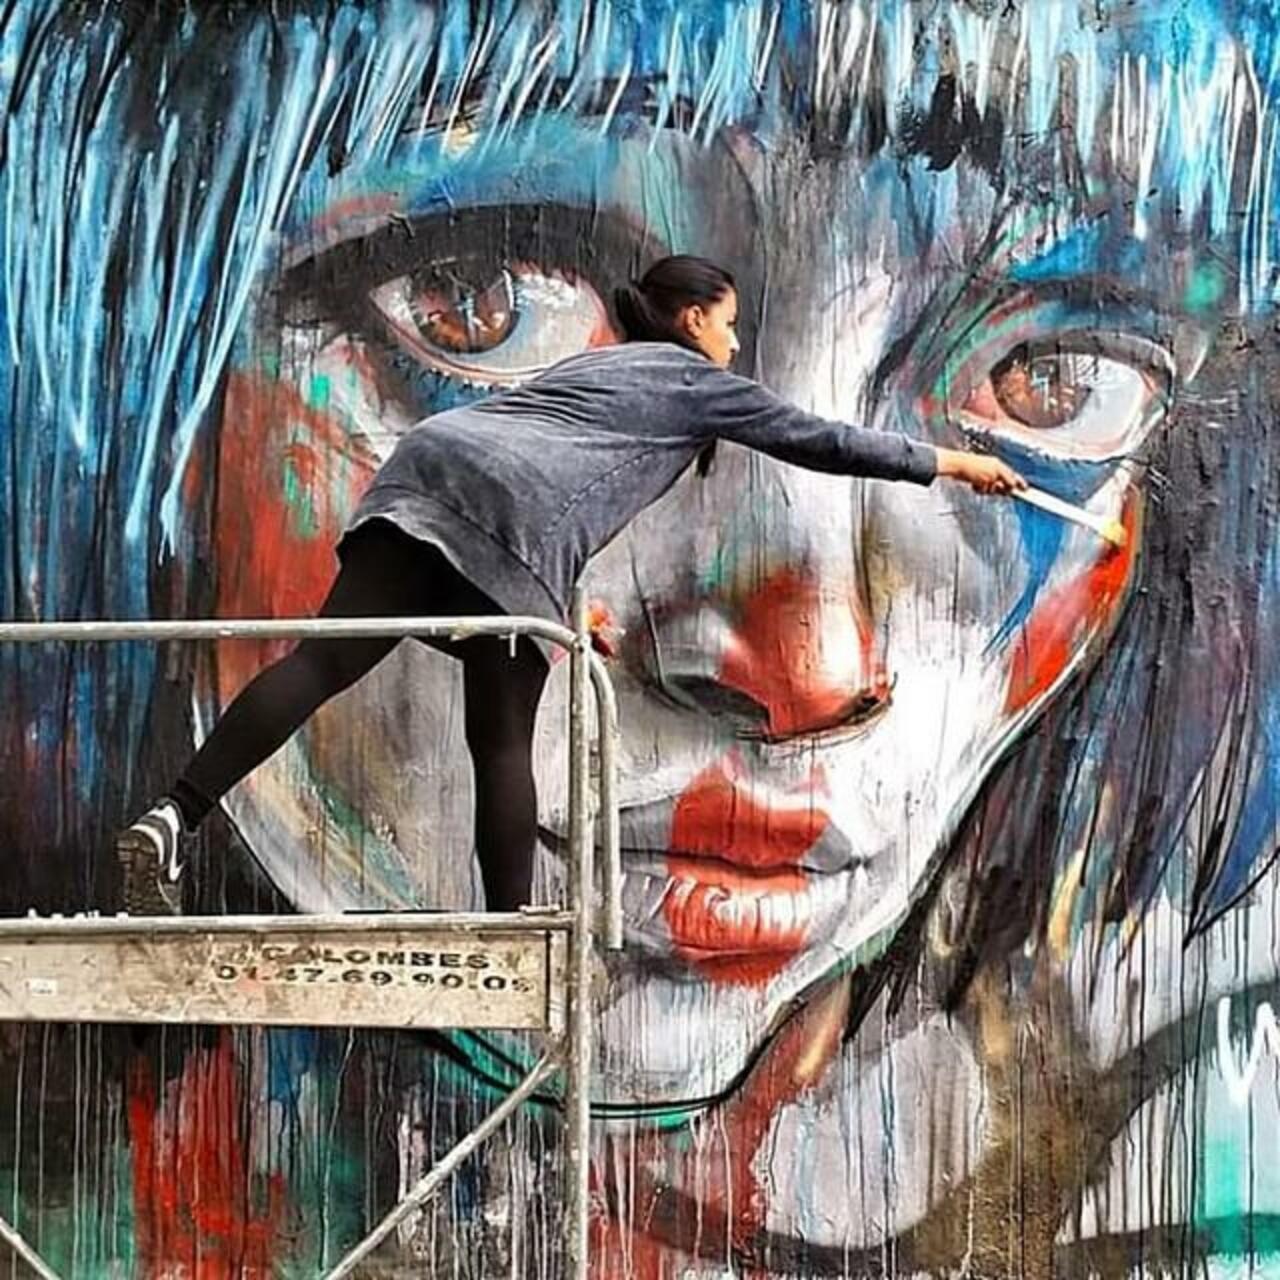 #Paris #graffiti photo by @streetarttourparis http://ift.tt/1LuyeA6 #StreetArt http://t.co/TSYKA9vBf4